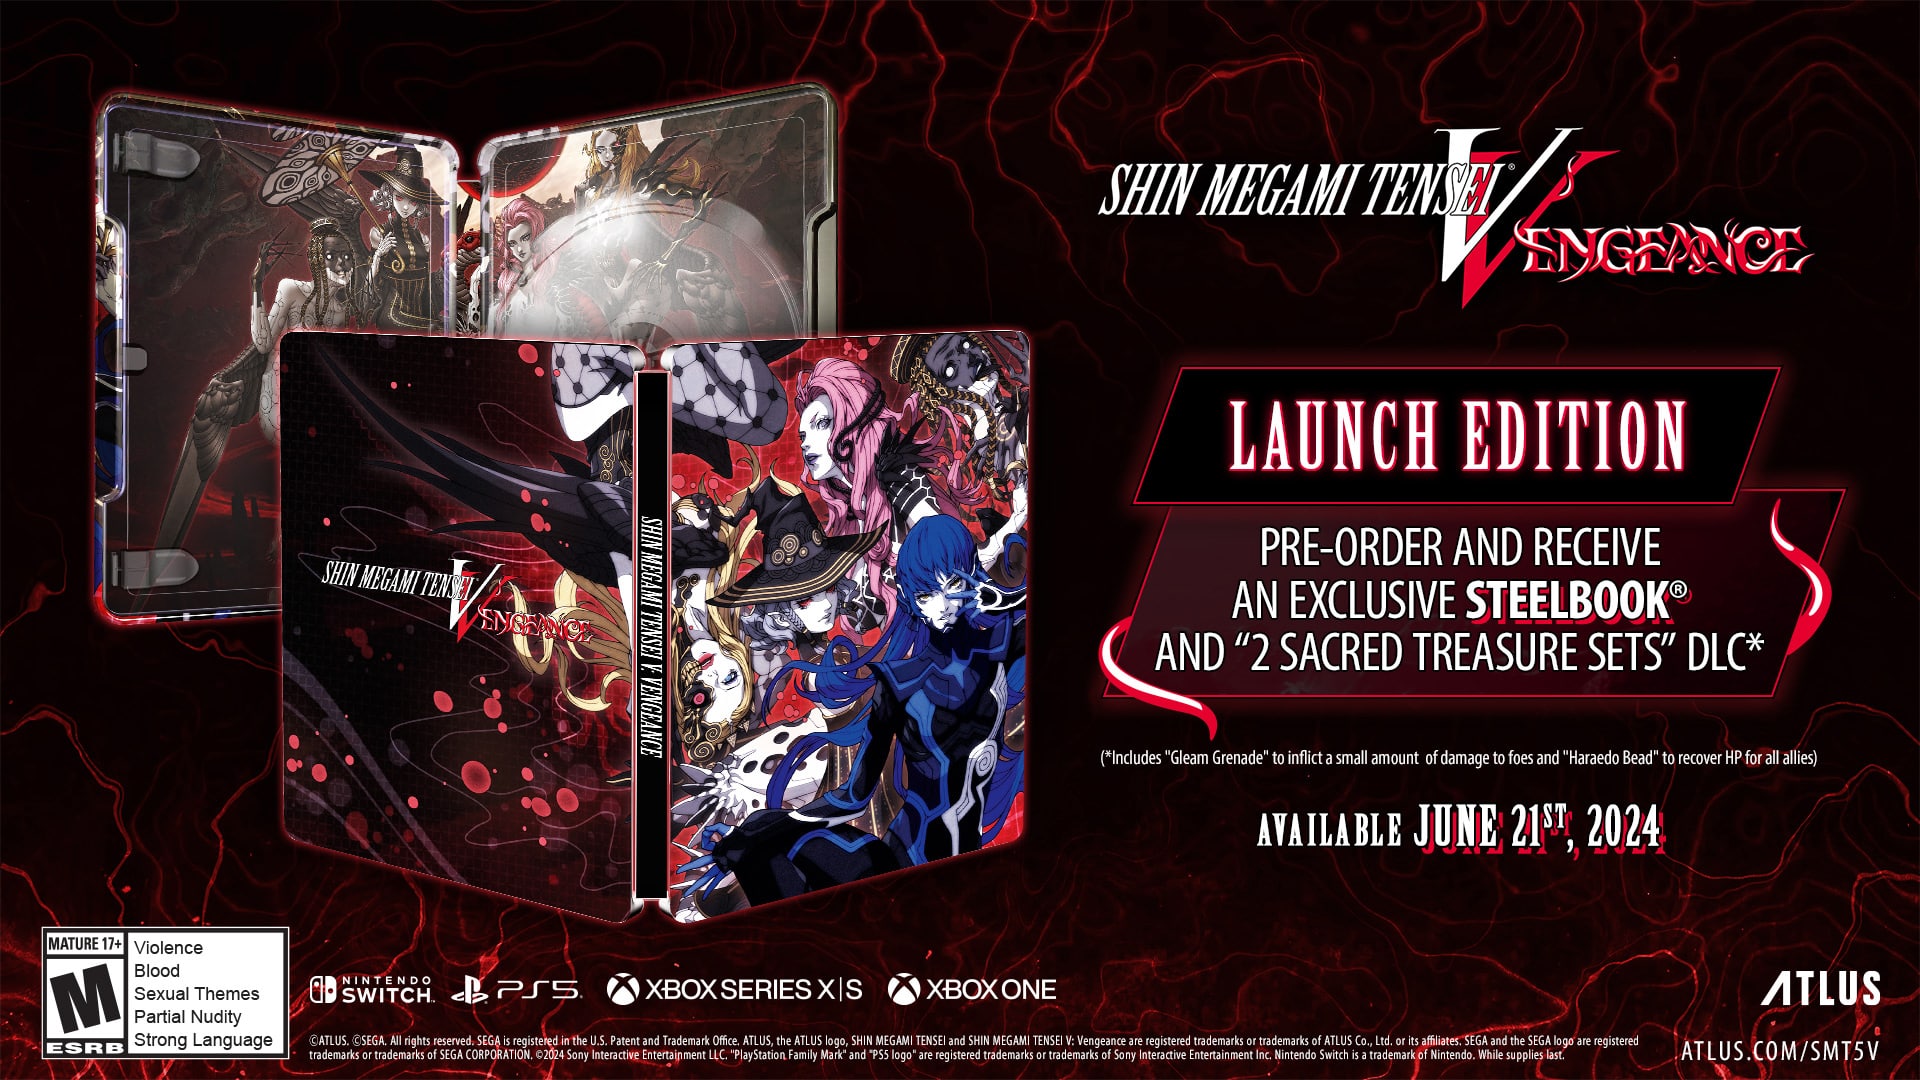 Shin Megami Tensei Vengance Launch Edition. Promo Photo provided by ATLUS